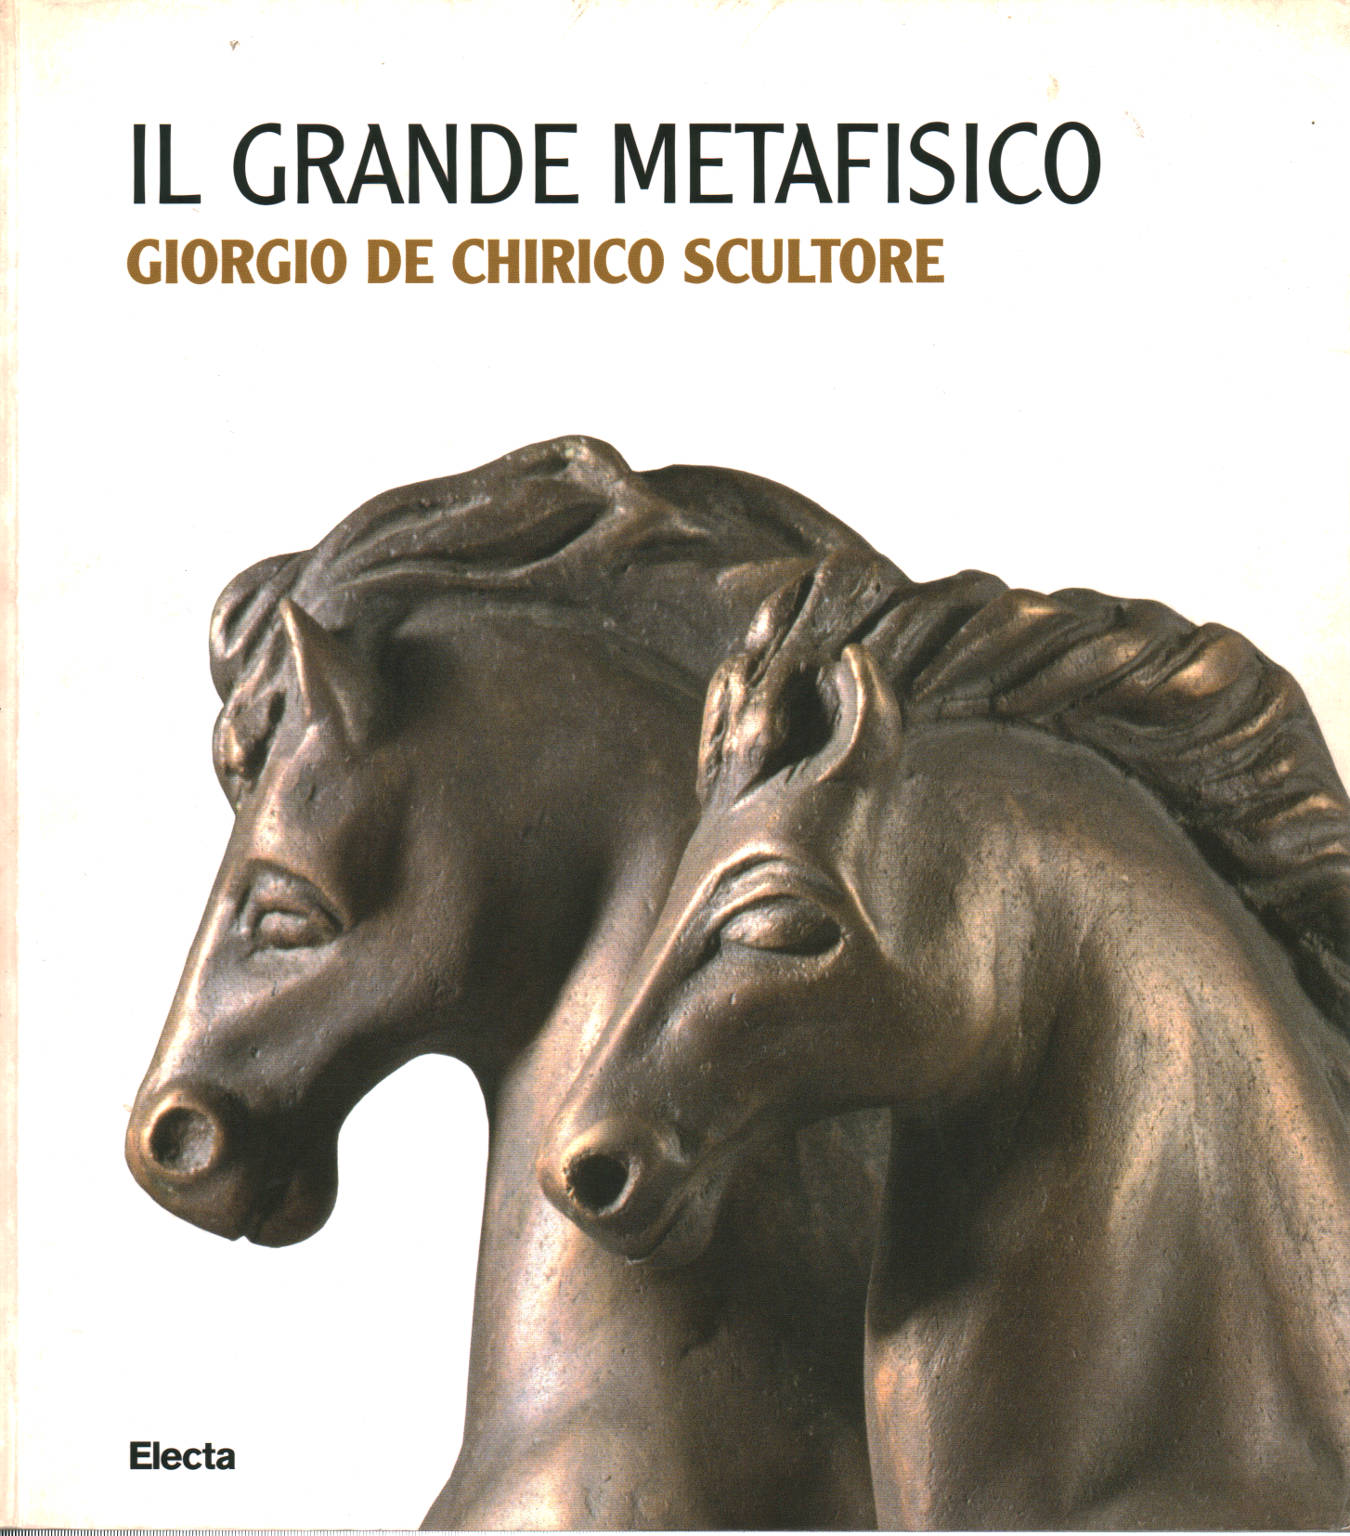 Der große metaphysiker: Giorgio de Chirico bildhauer, Franco Jungs